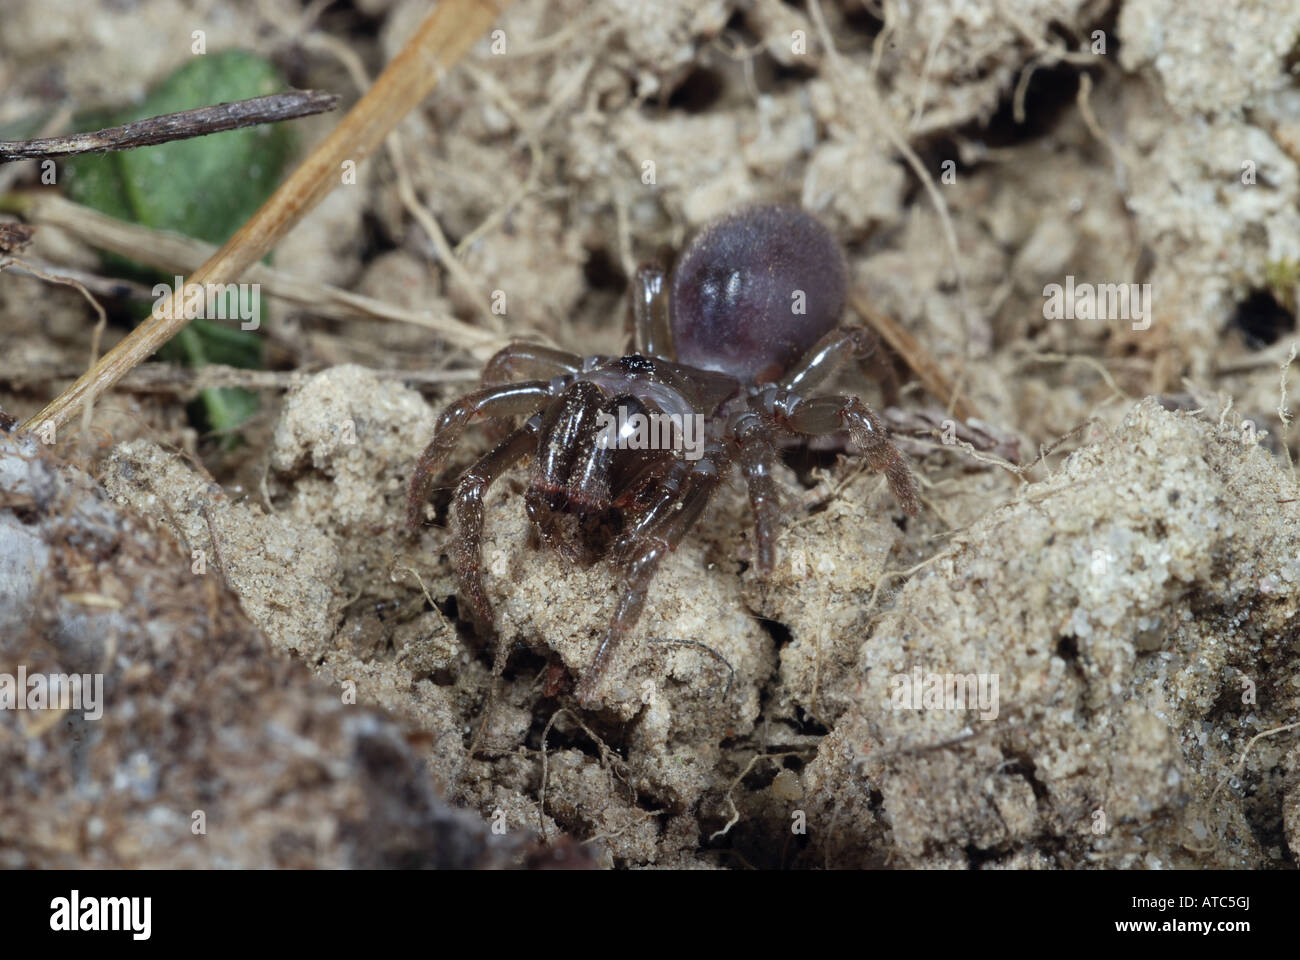 purse-web spider (Atypus affinis), single animal Stock Photo